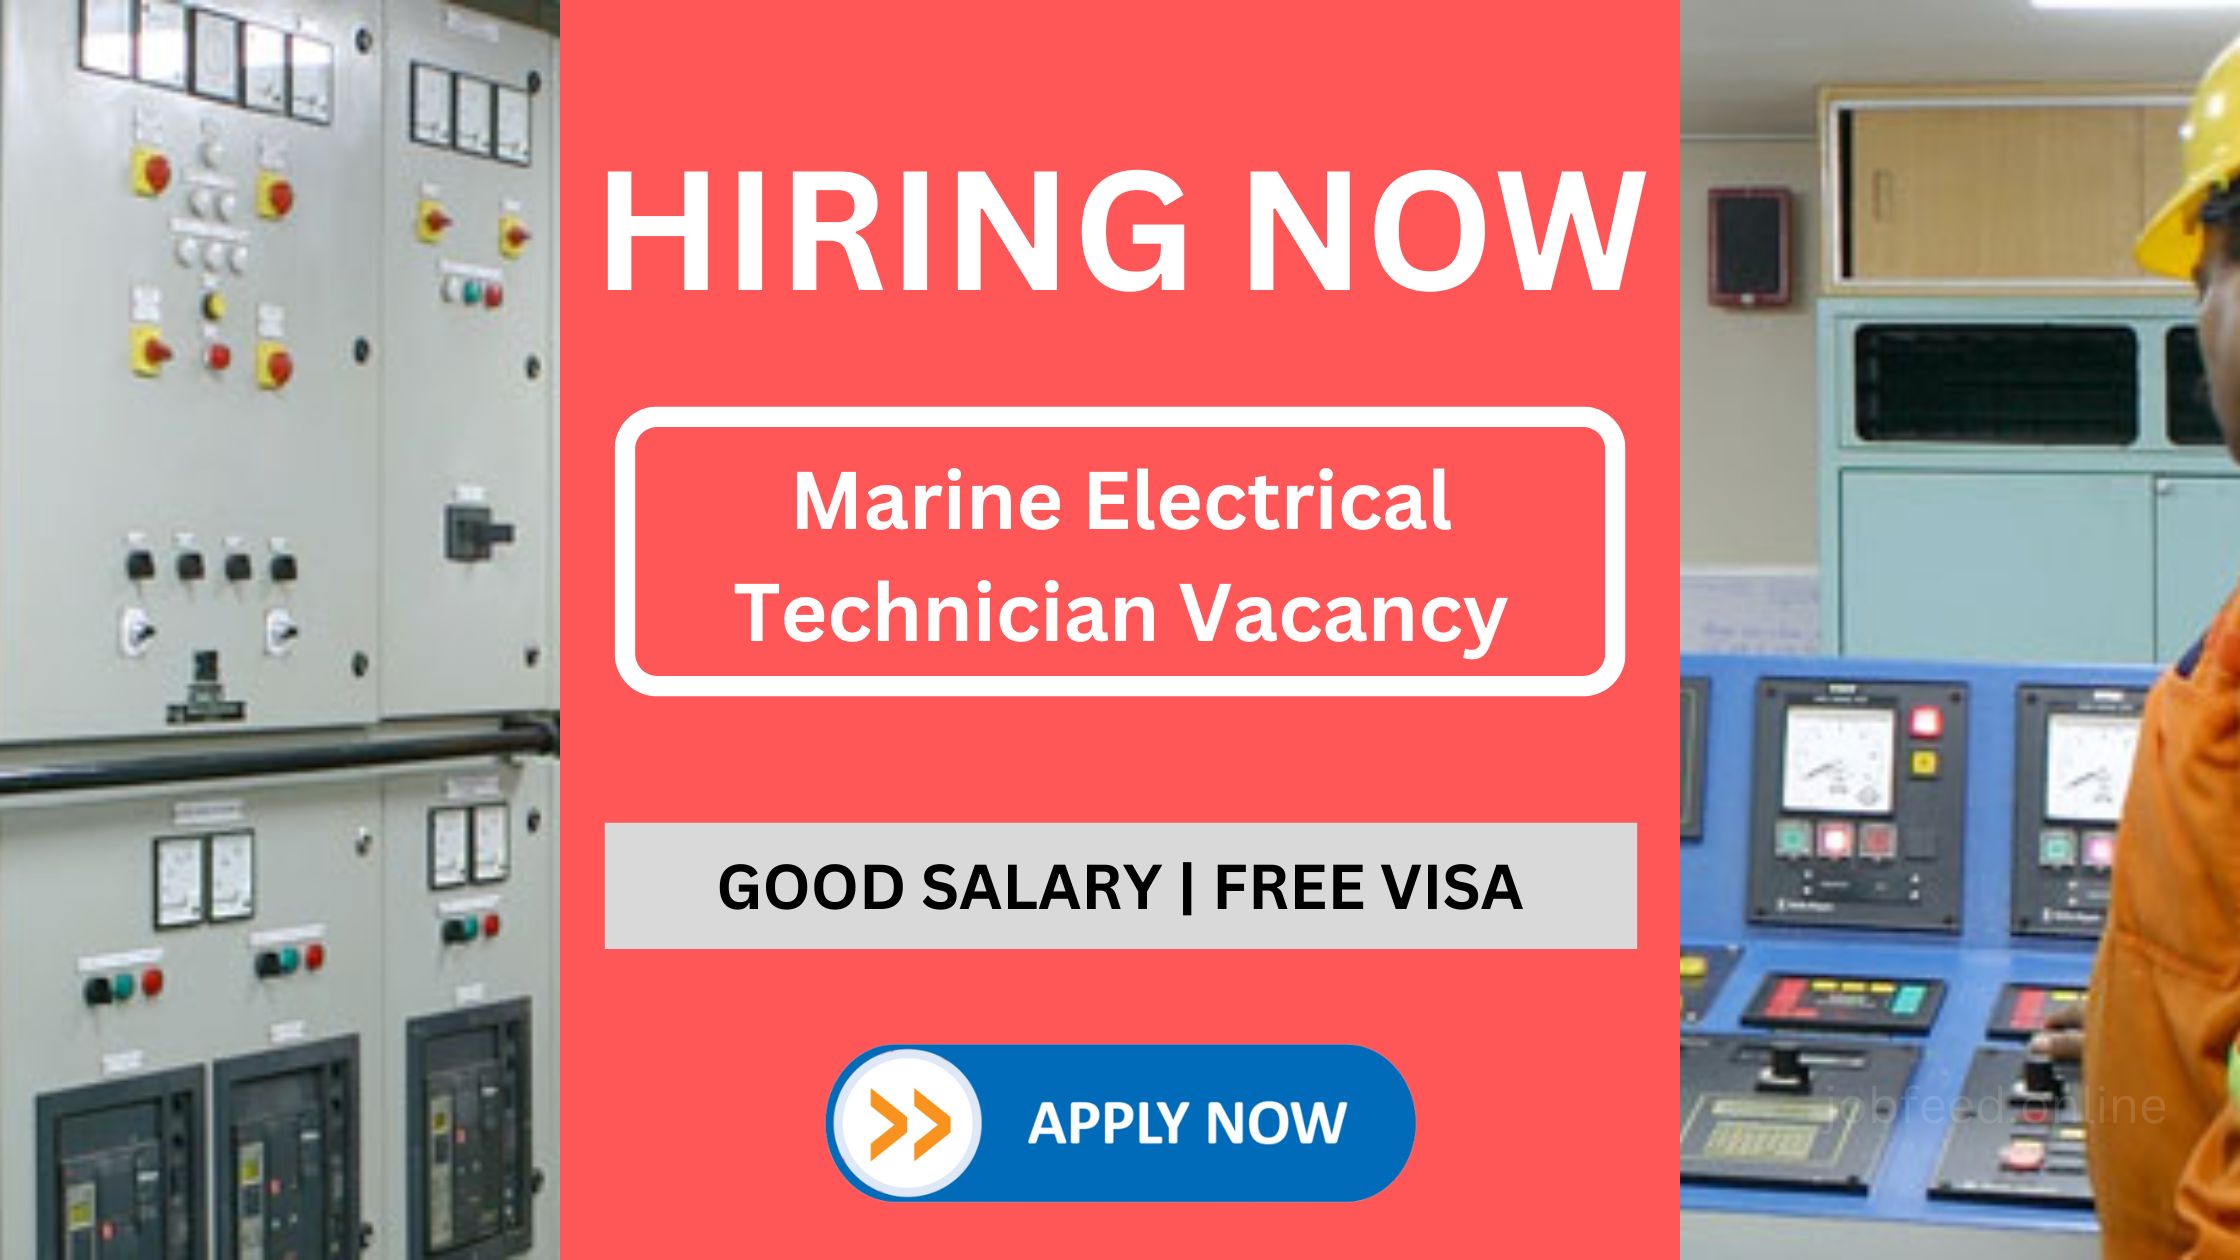 Marine Electrical Technician Vacancy with Good Salary